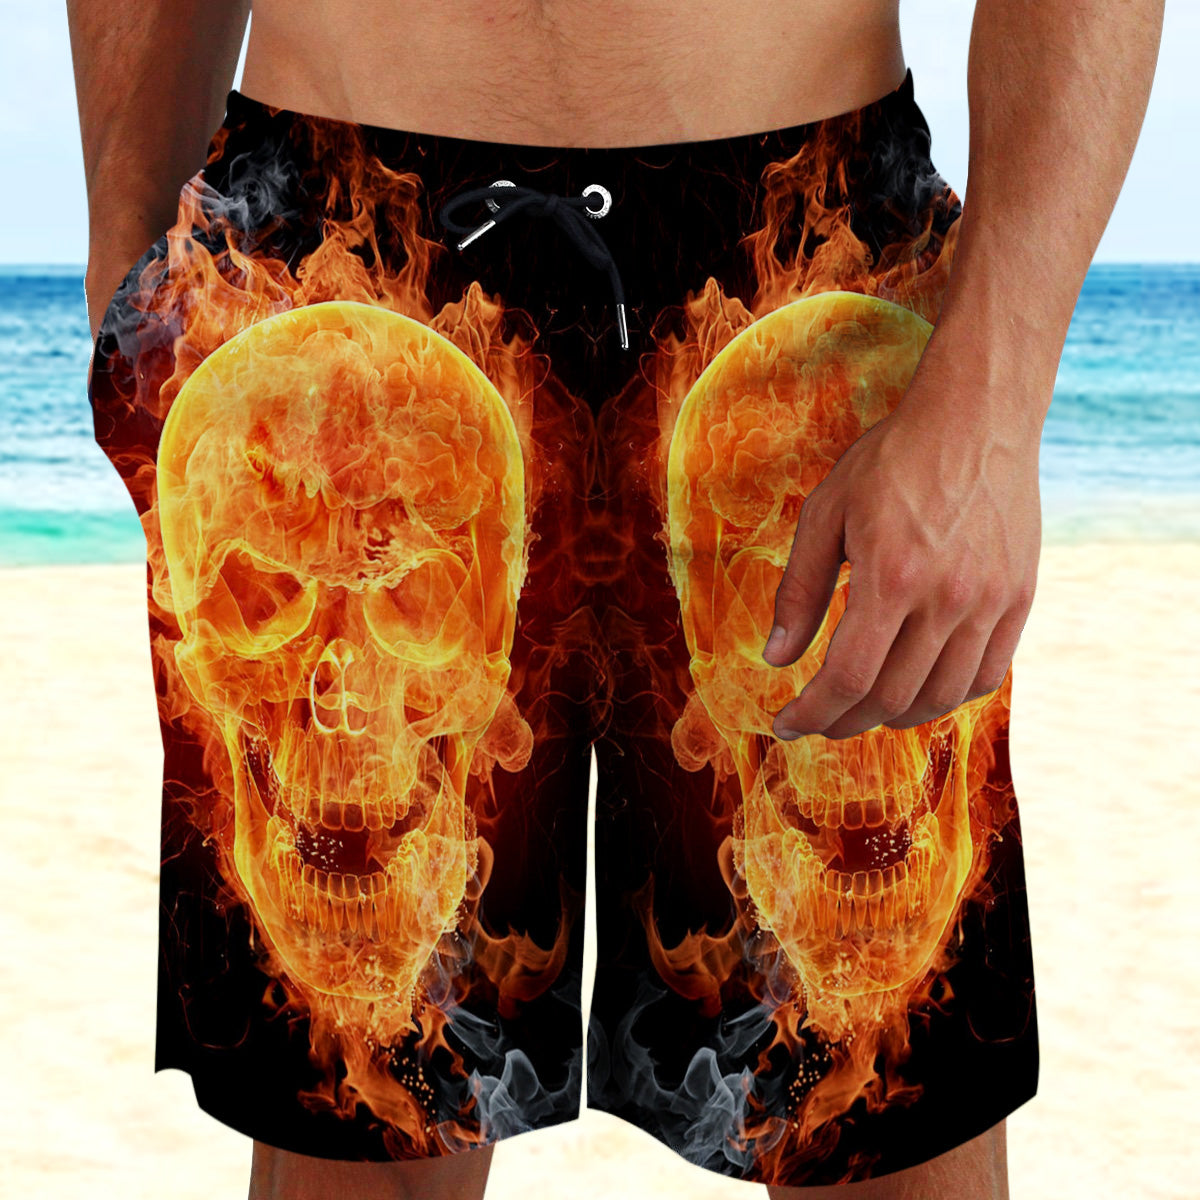 Skull Fire Beach Shorts 06229